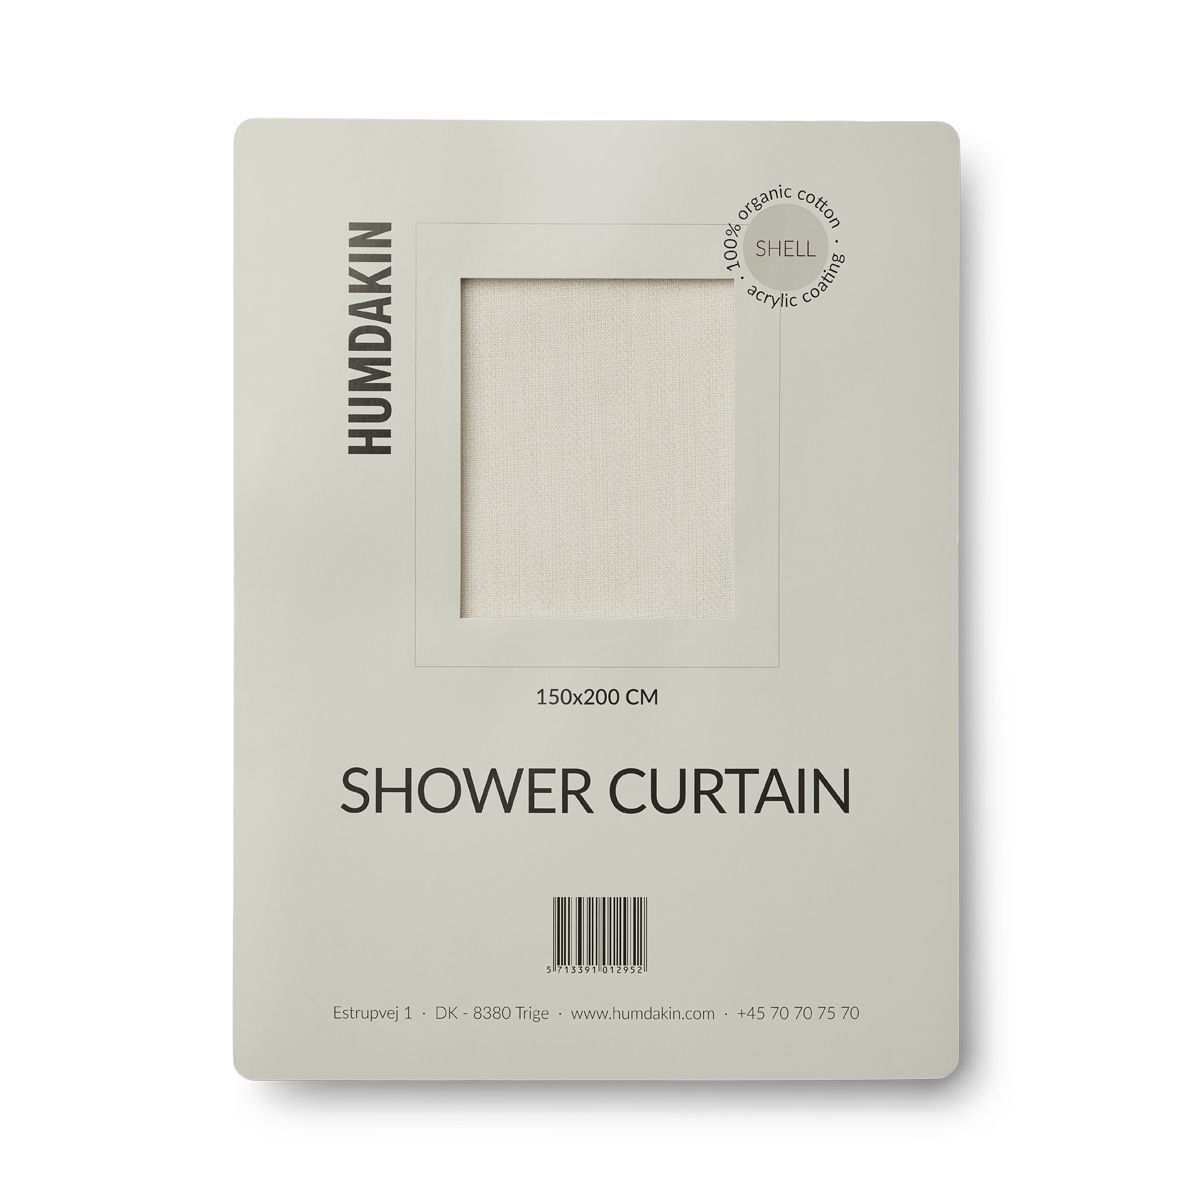 Humdakin Shower Curtain Made Of Organic Cotton, Shell